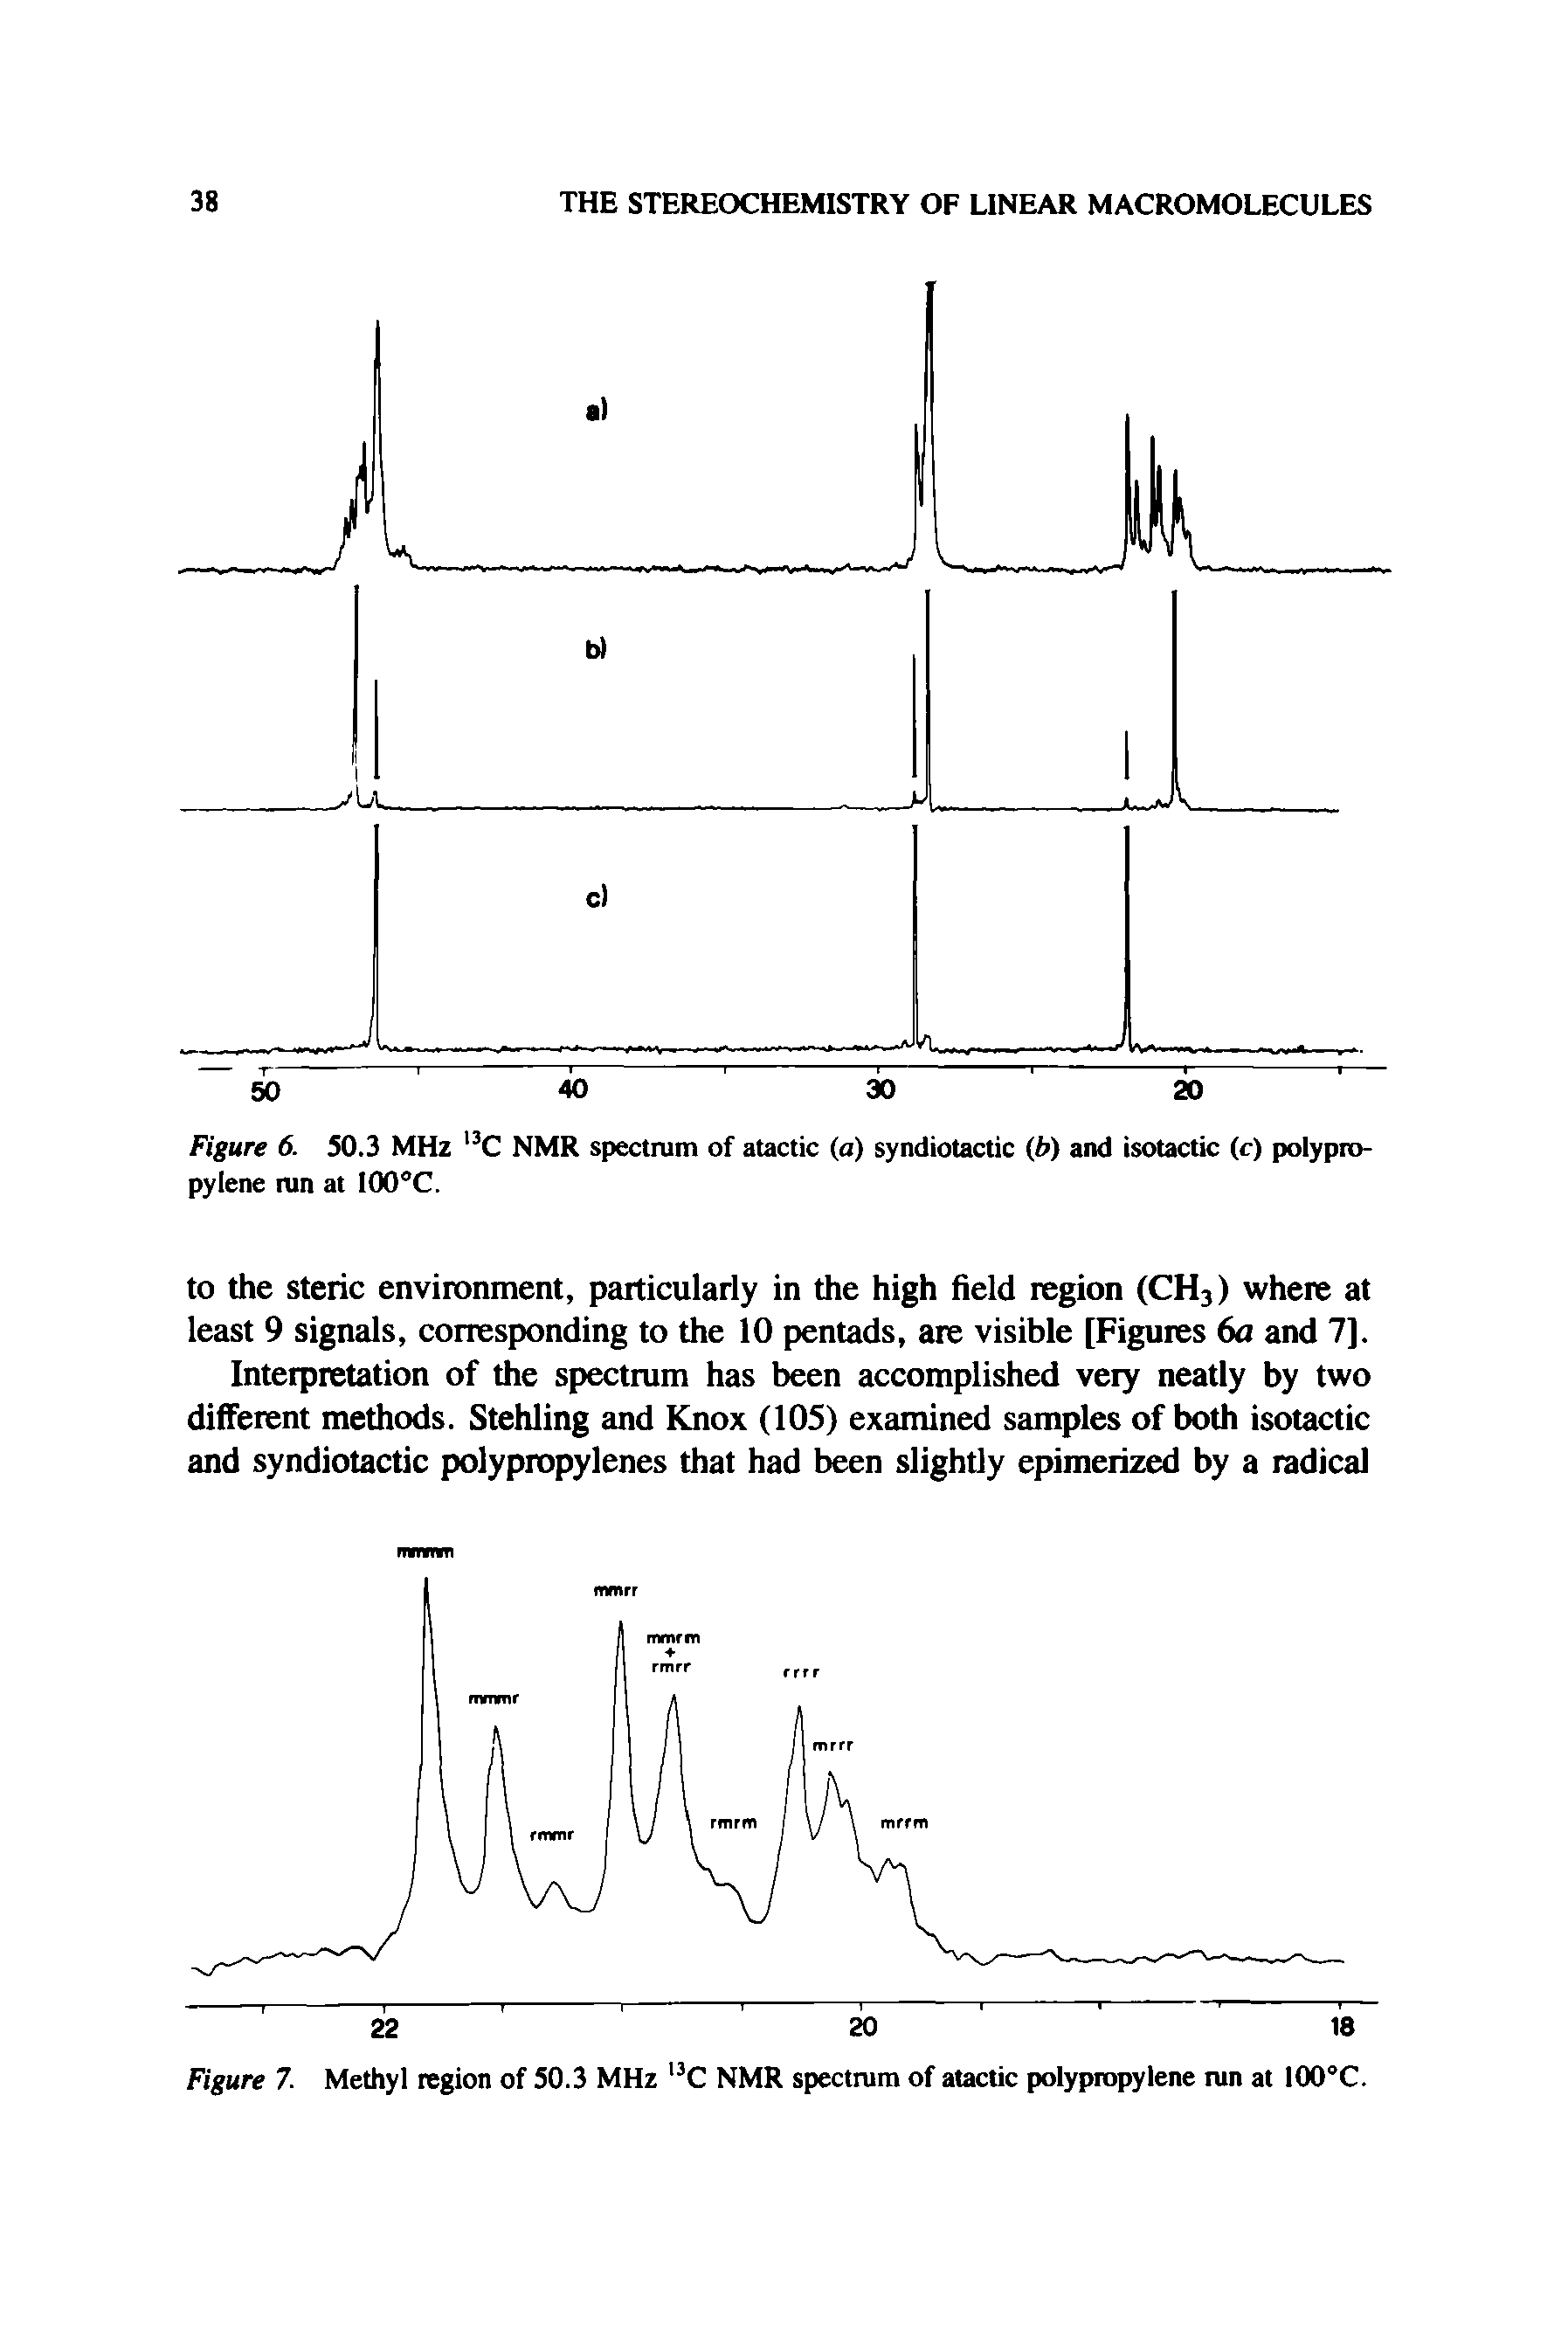 Figure 7. Methyl region of 50.3 MHz C NMR spectrum of atactic polypropylene ran at 100°C.